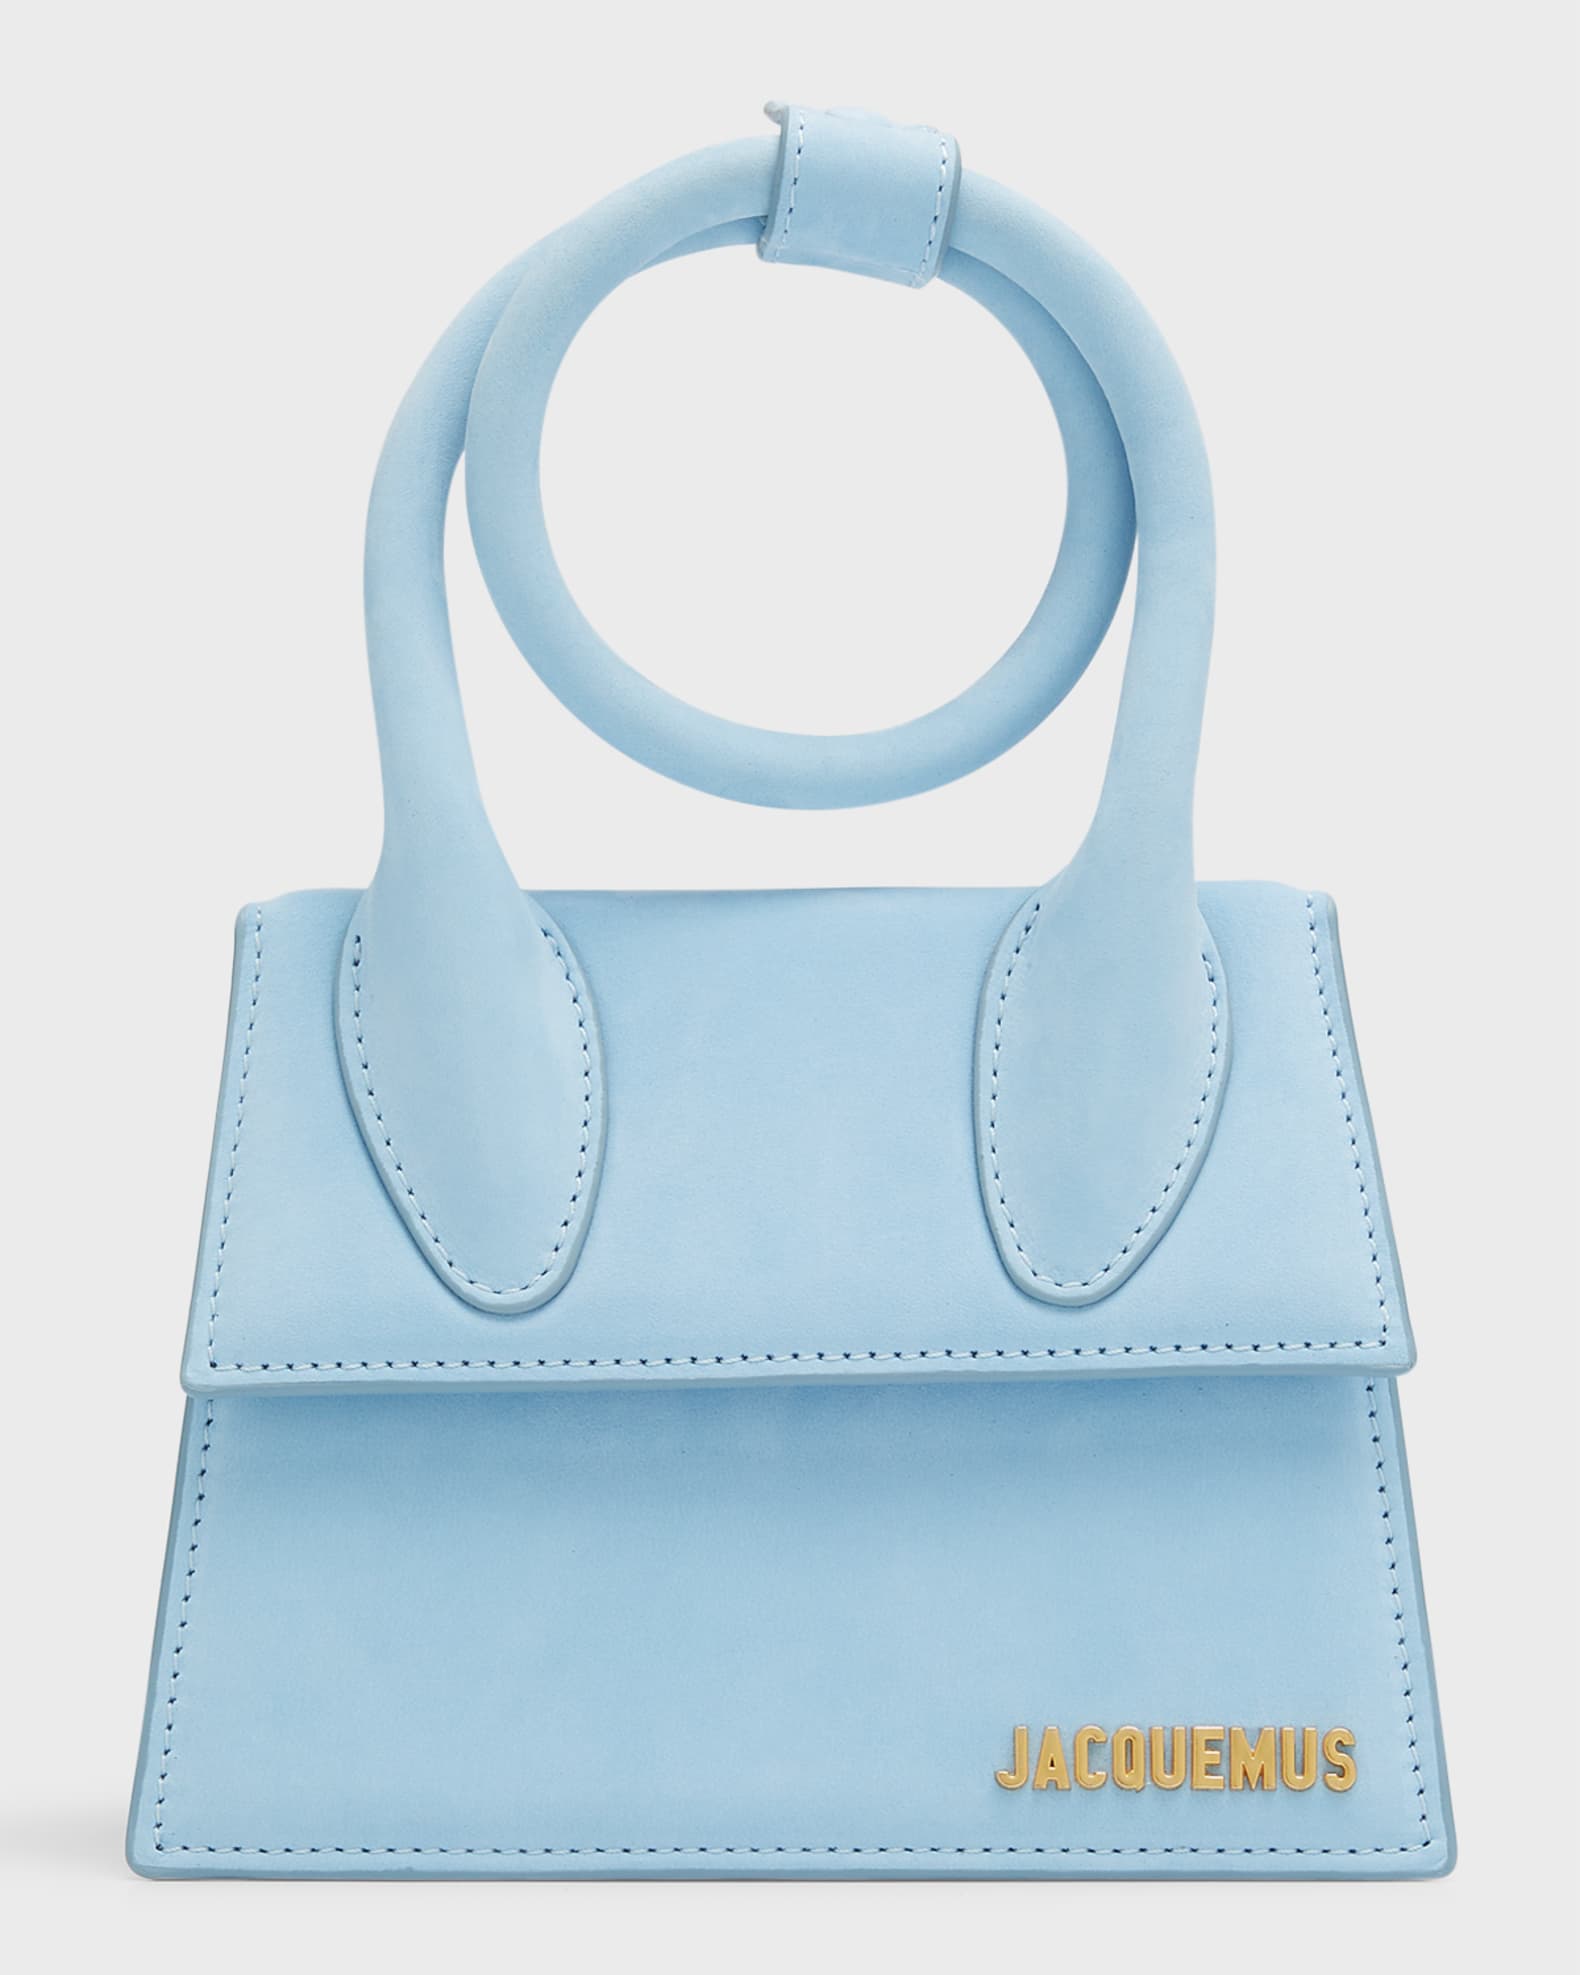 Jacquemus Le Chiquito Noeud Top-Handle Bag | Neiman Marcus